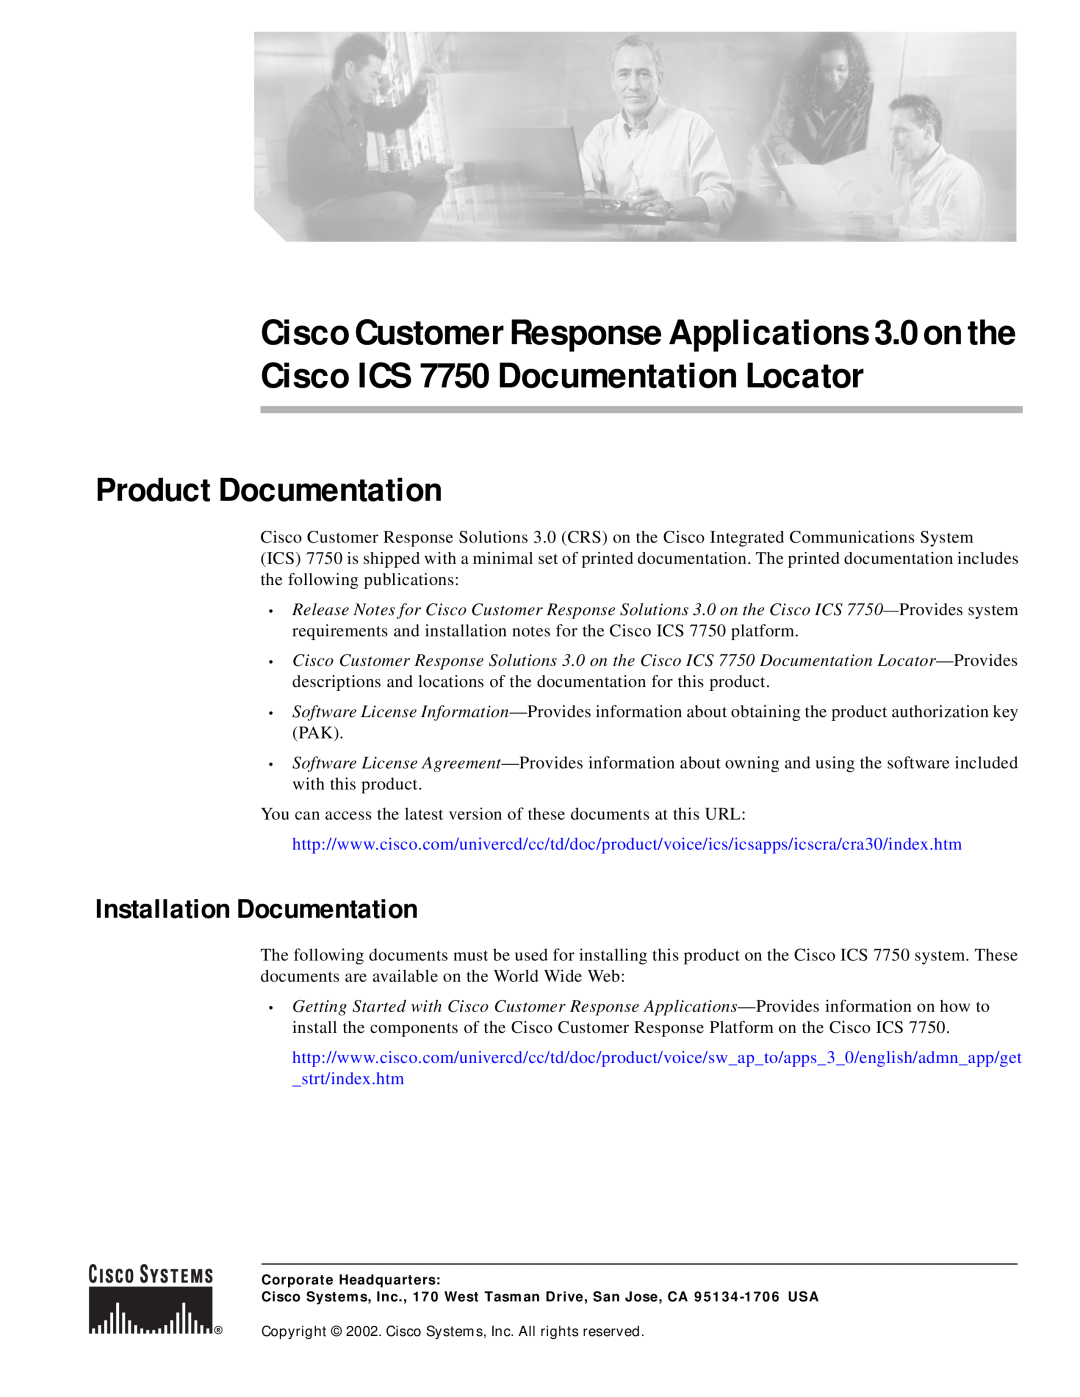 Cisco Systems ICS 7750 manual Product Documentation, Installation Documentation 